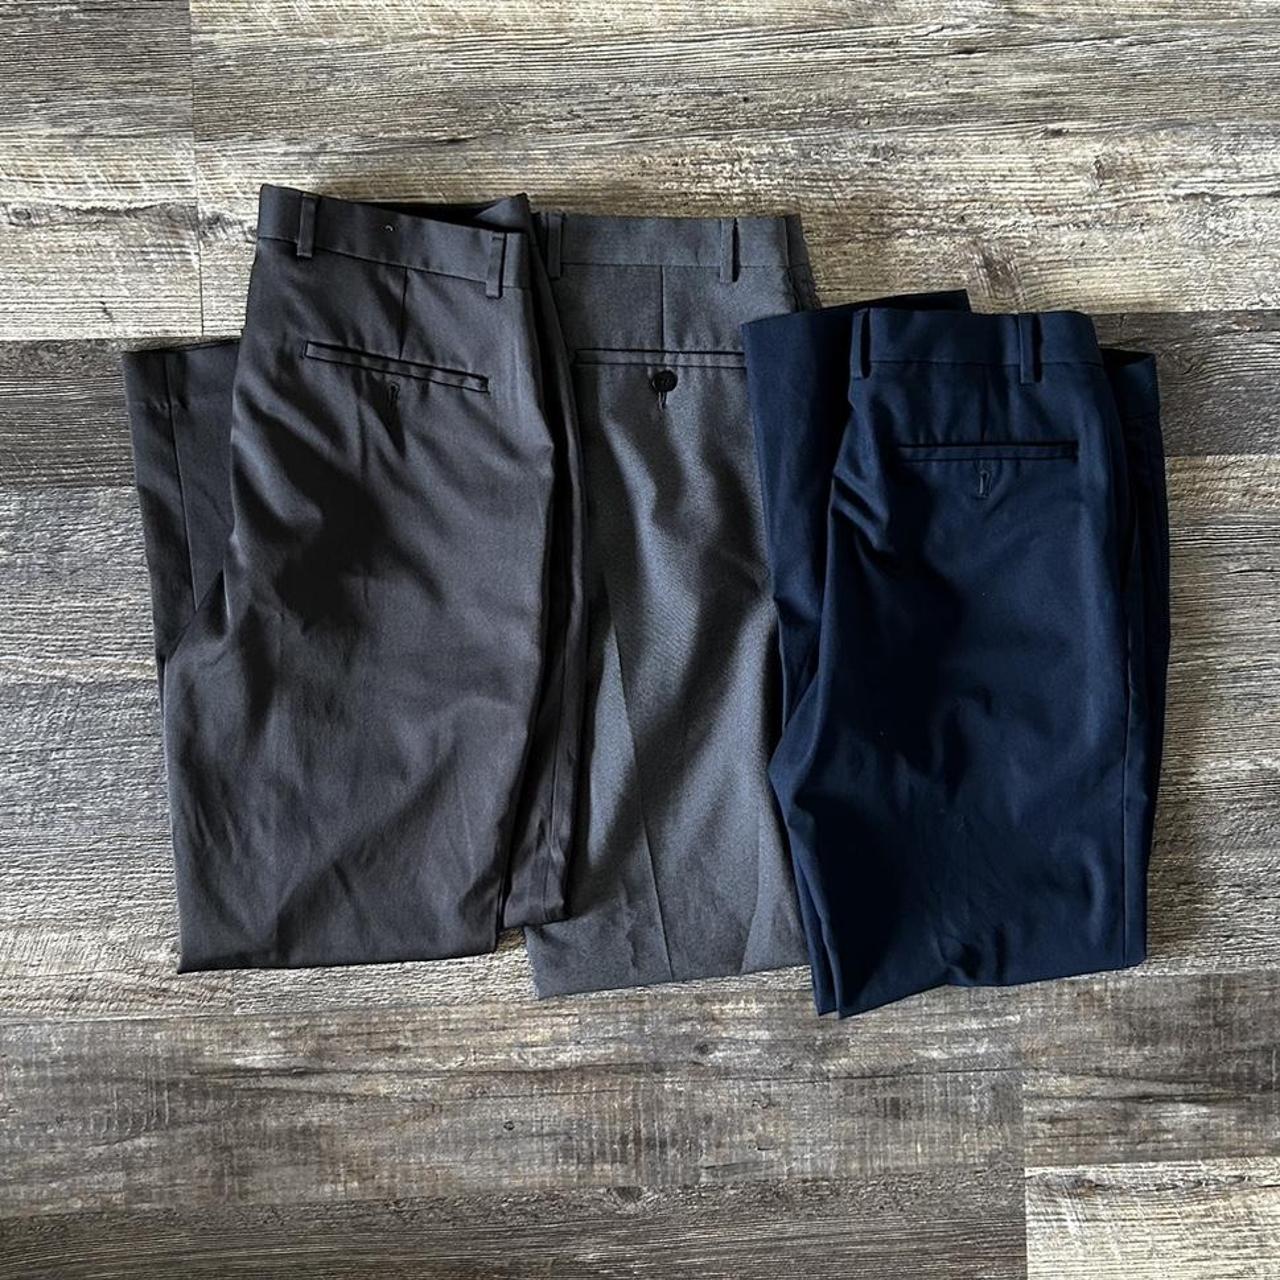 3 Dress pants Colors: Charcoal Grey / Grey / Navy - Depop